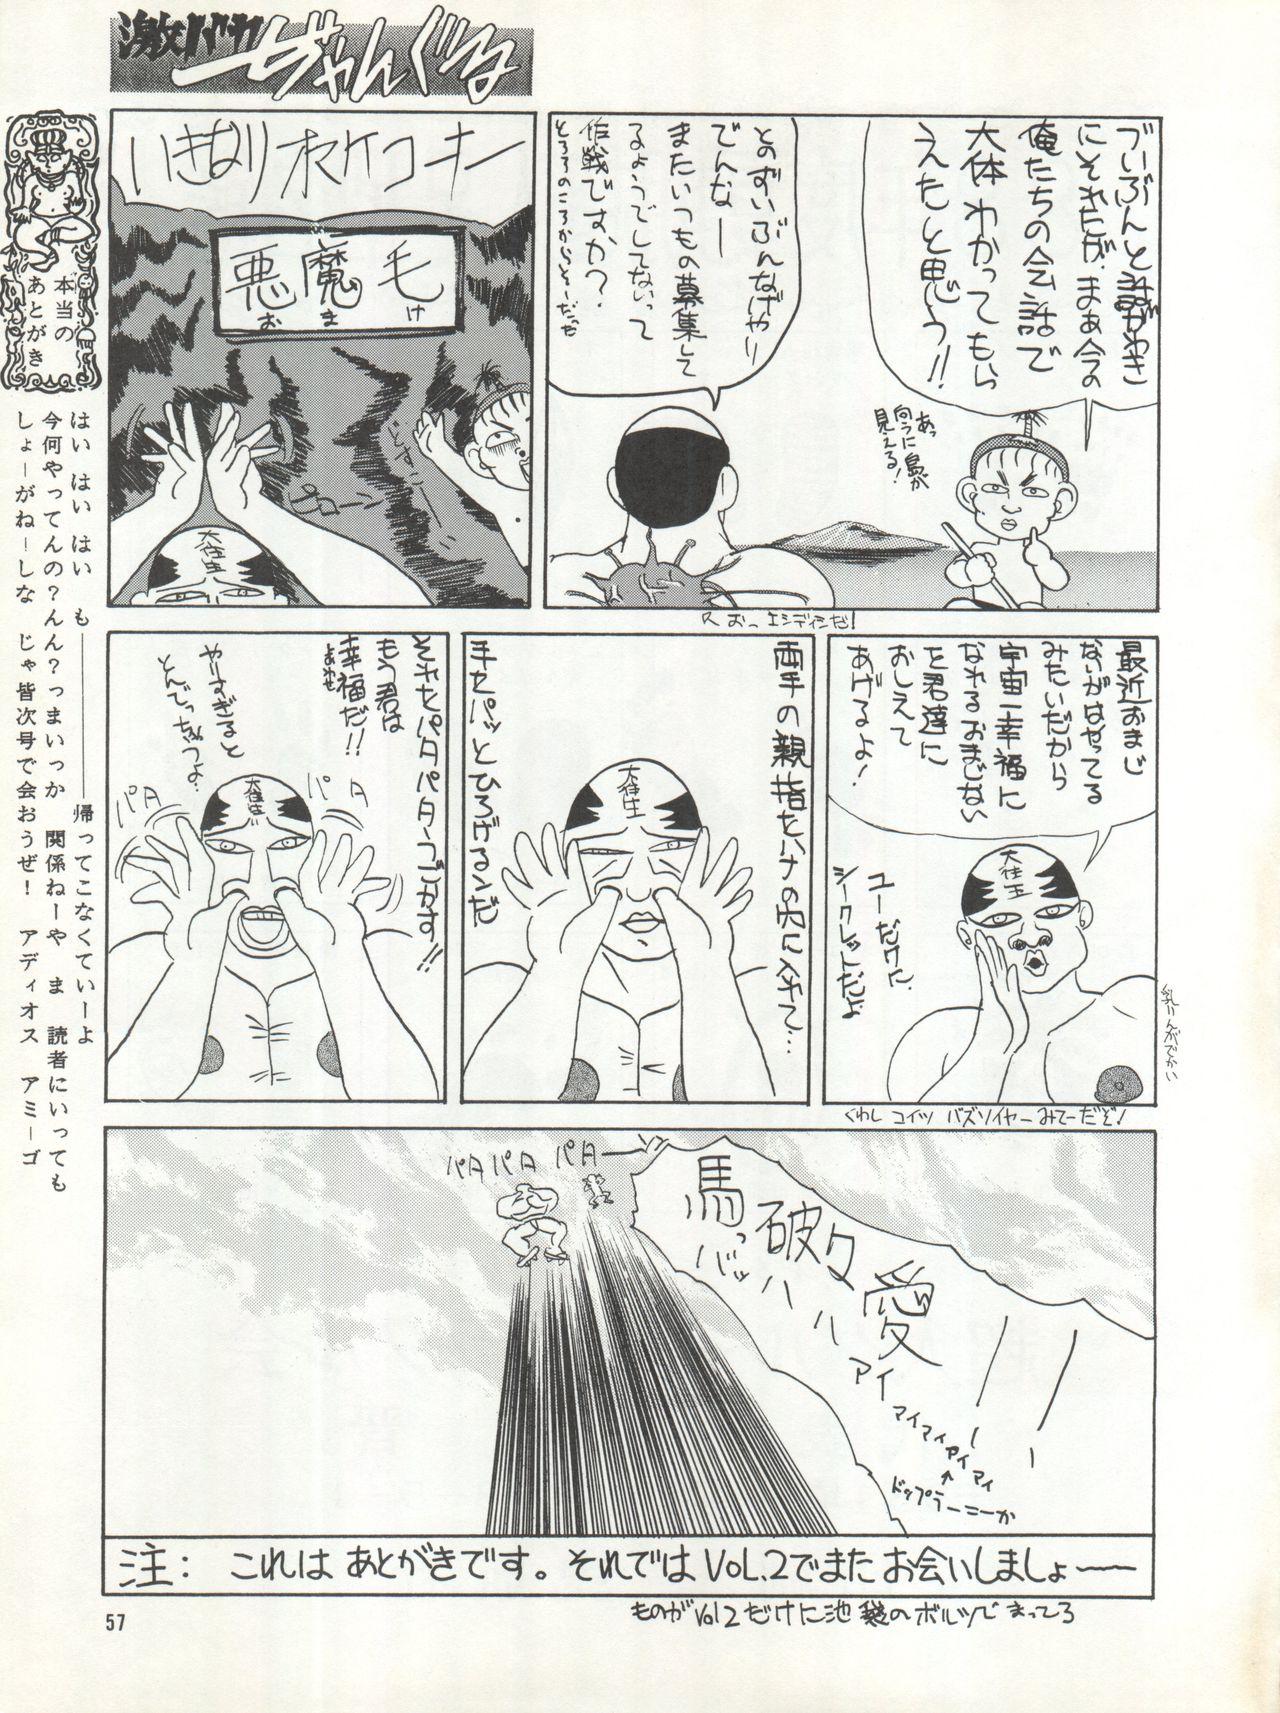 Geki Baka Jungle Vol. 1 56